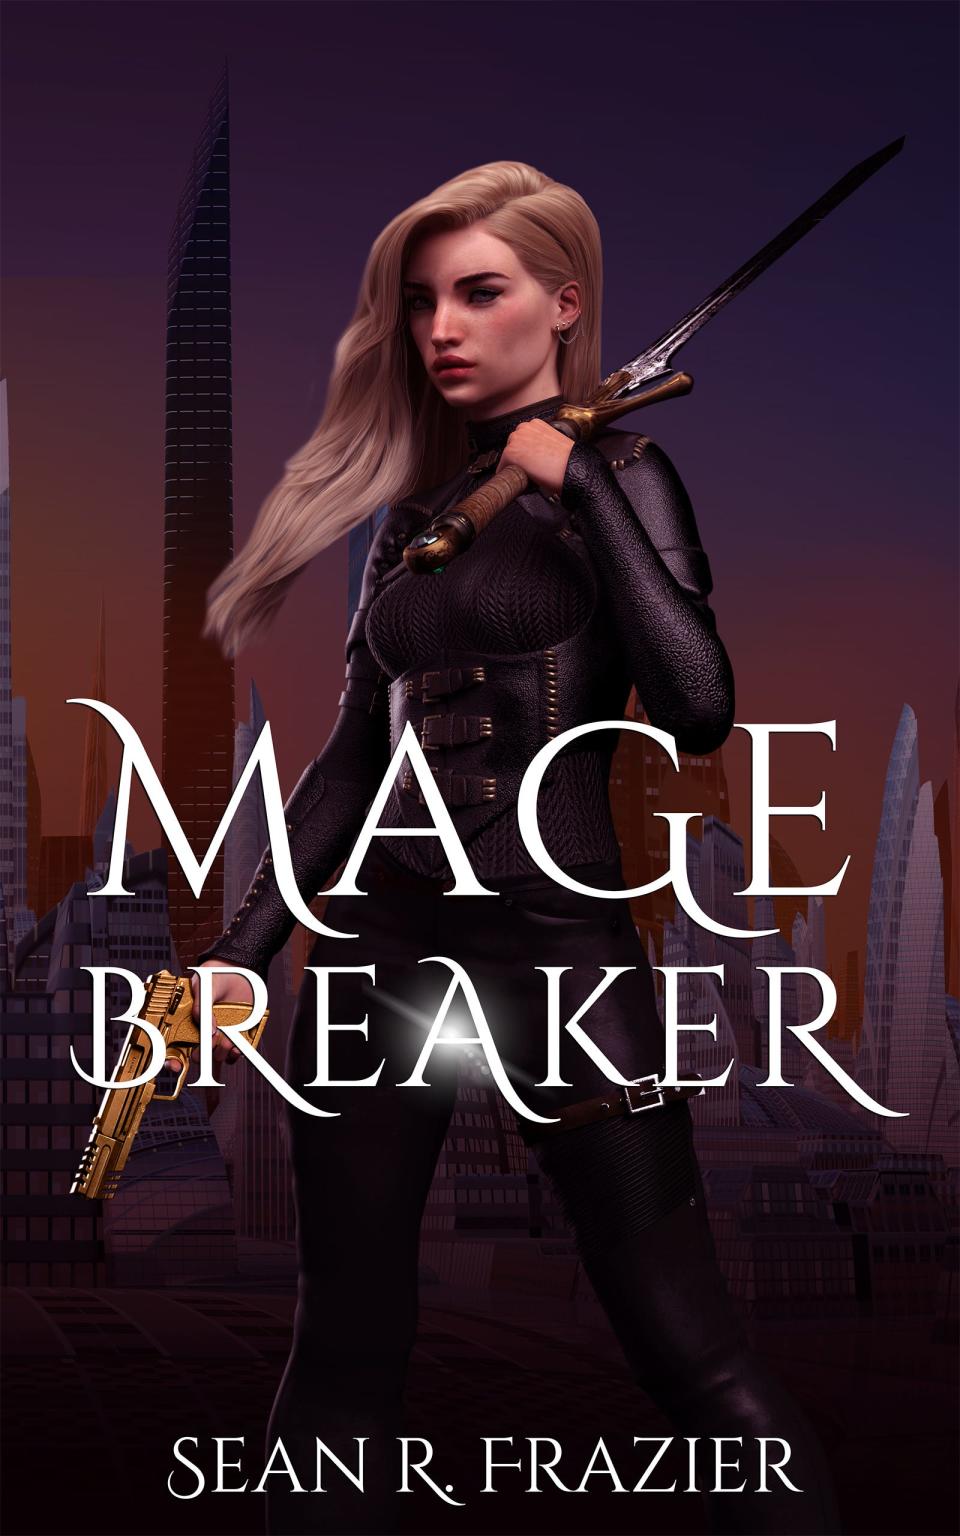 "Mage Breaker"